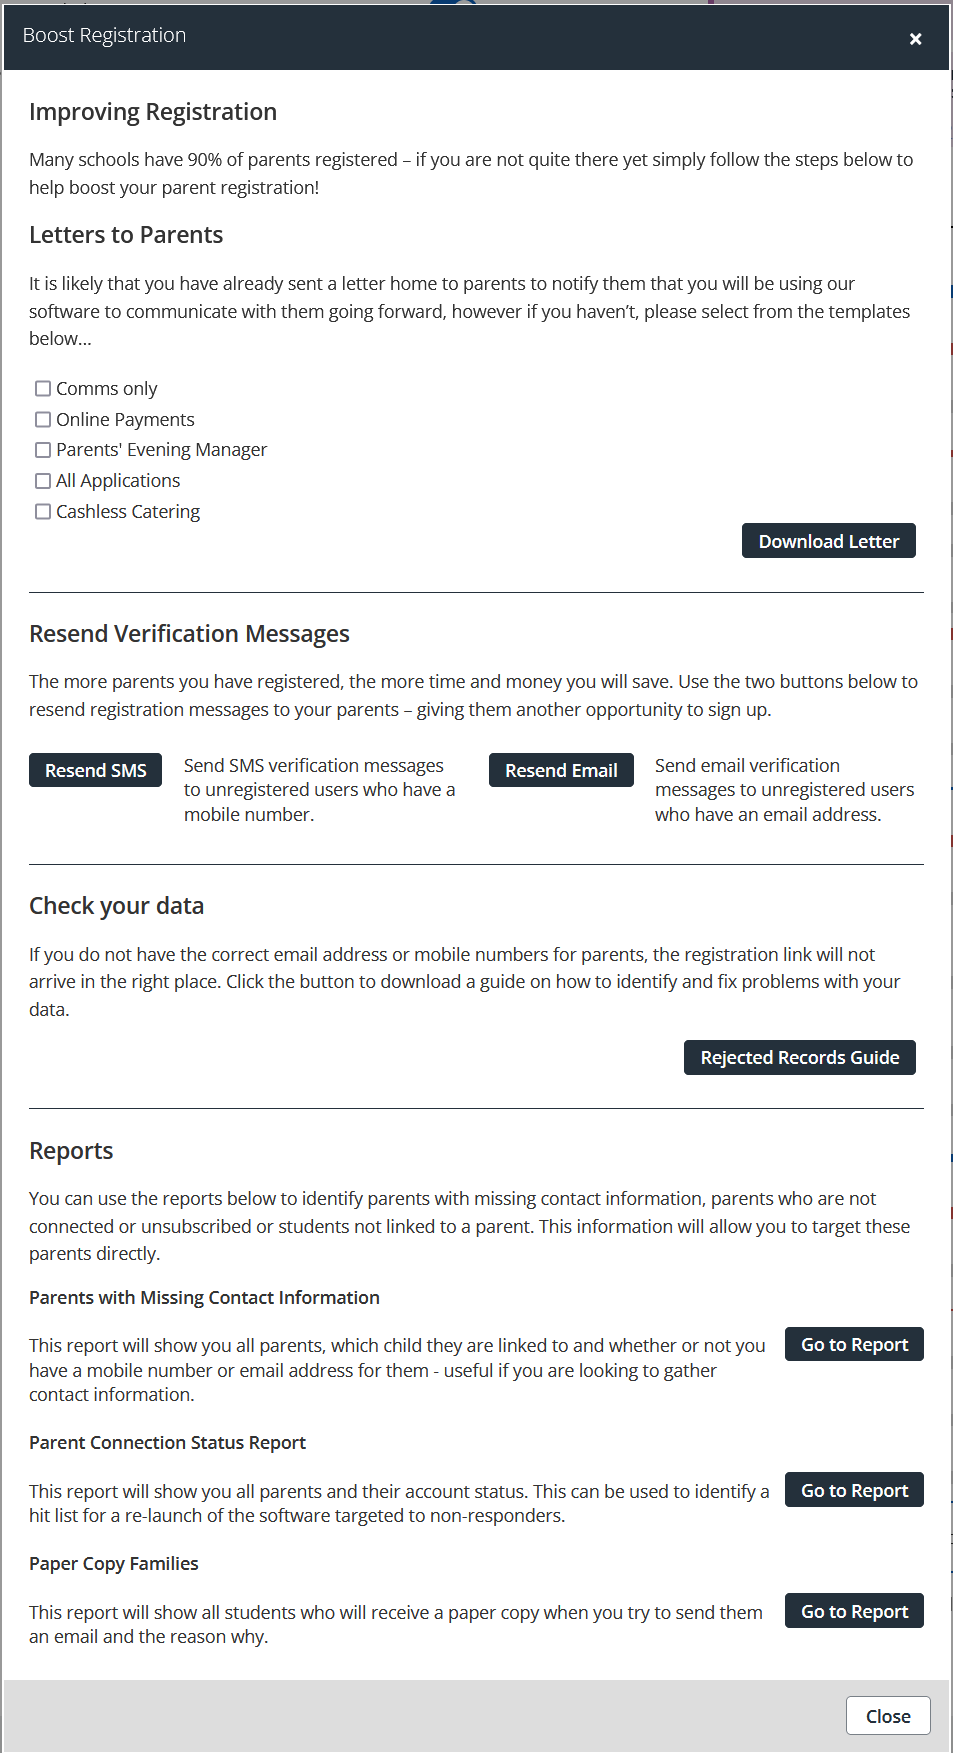 IRIS ParentMail Overview - Improve your Stats - Boost Registration